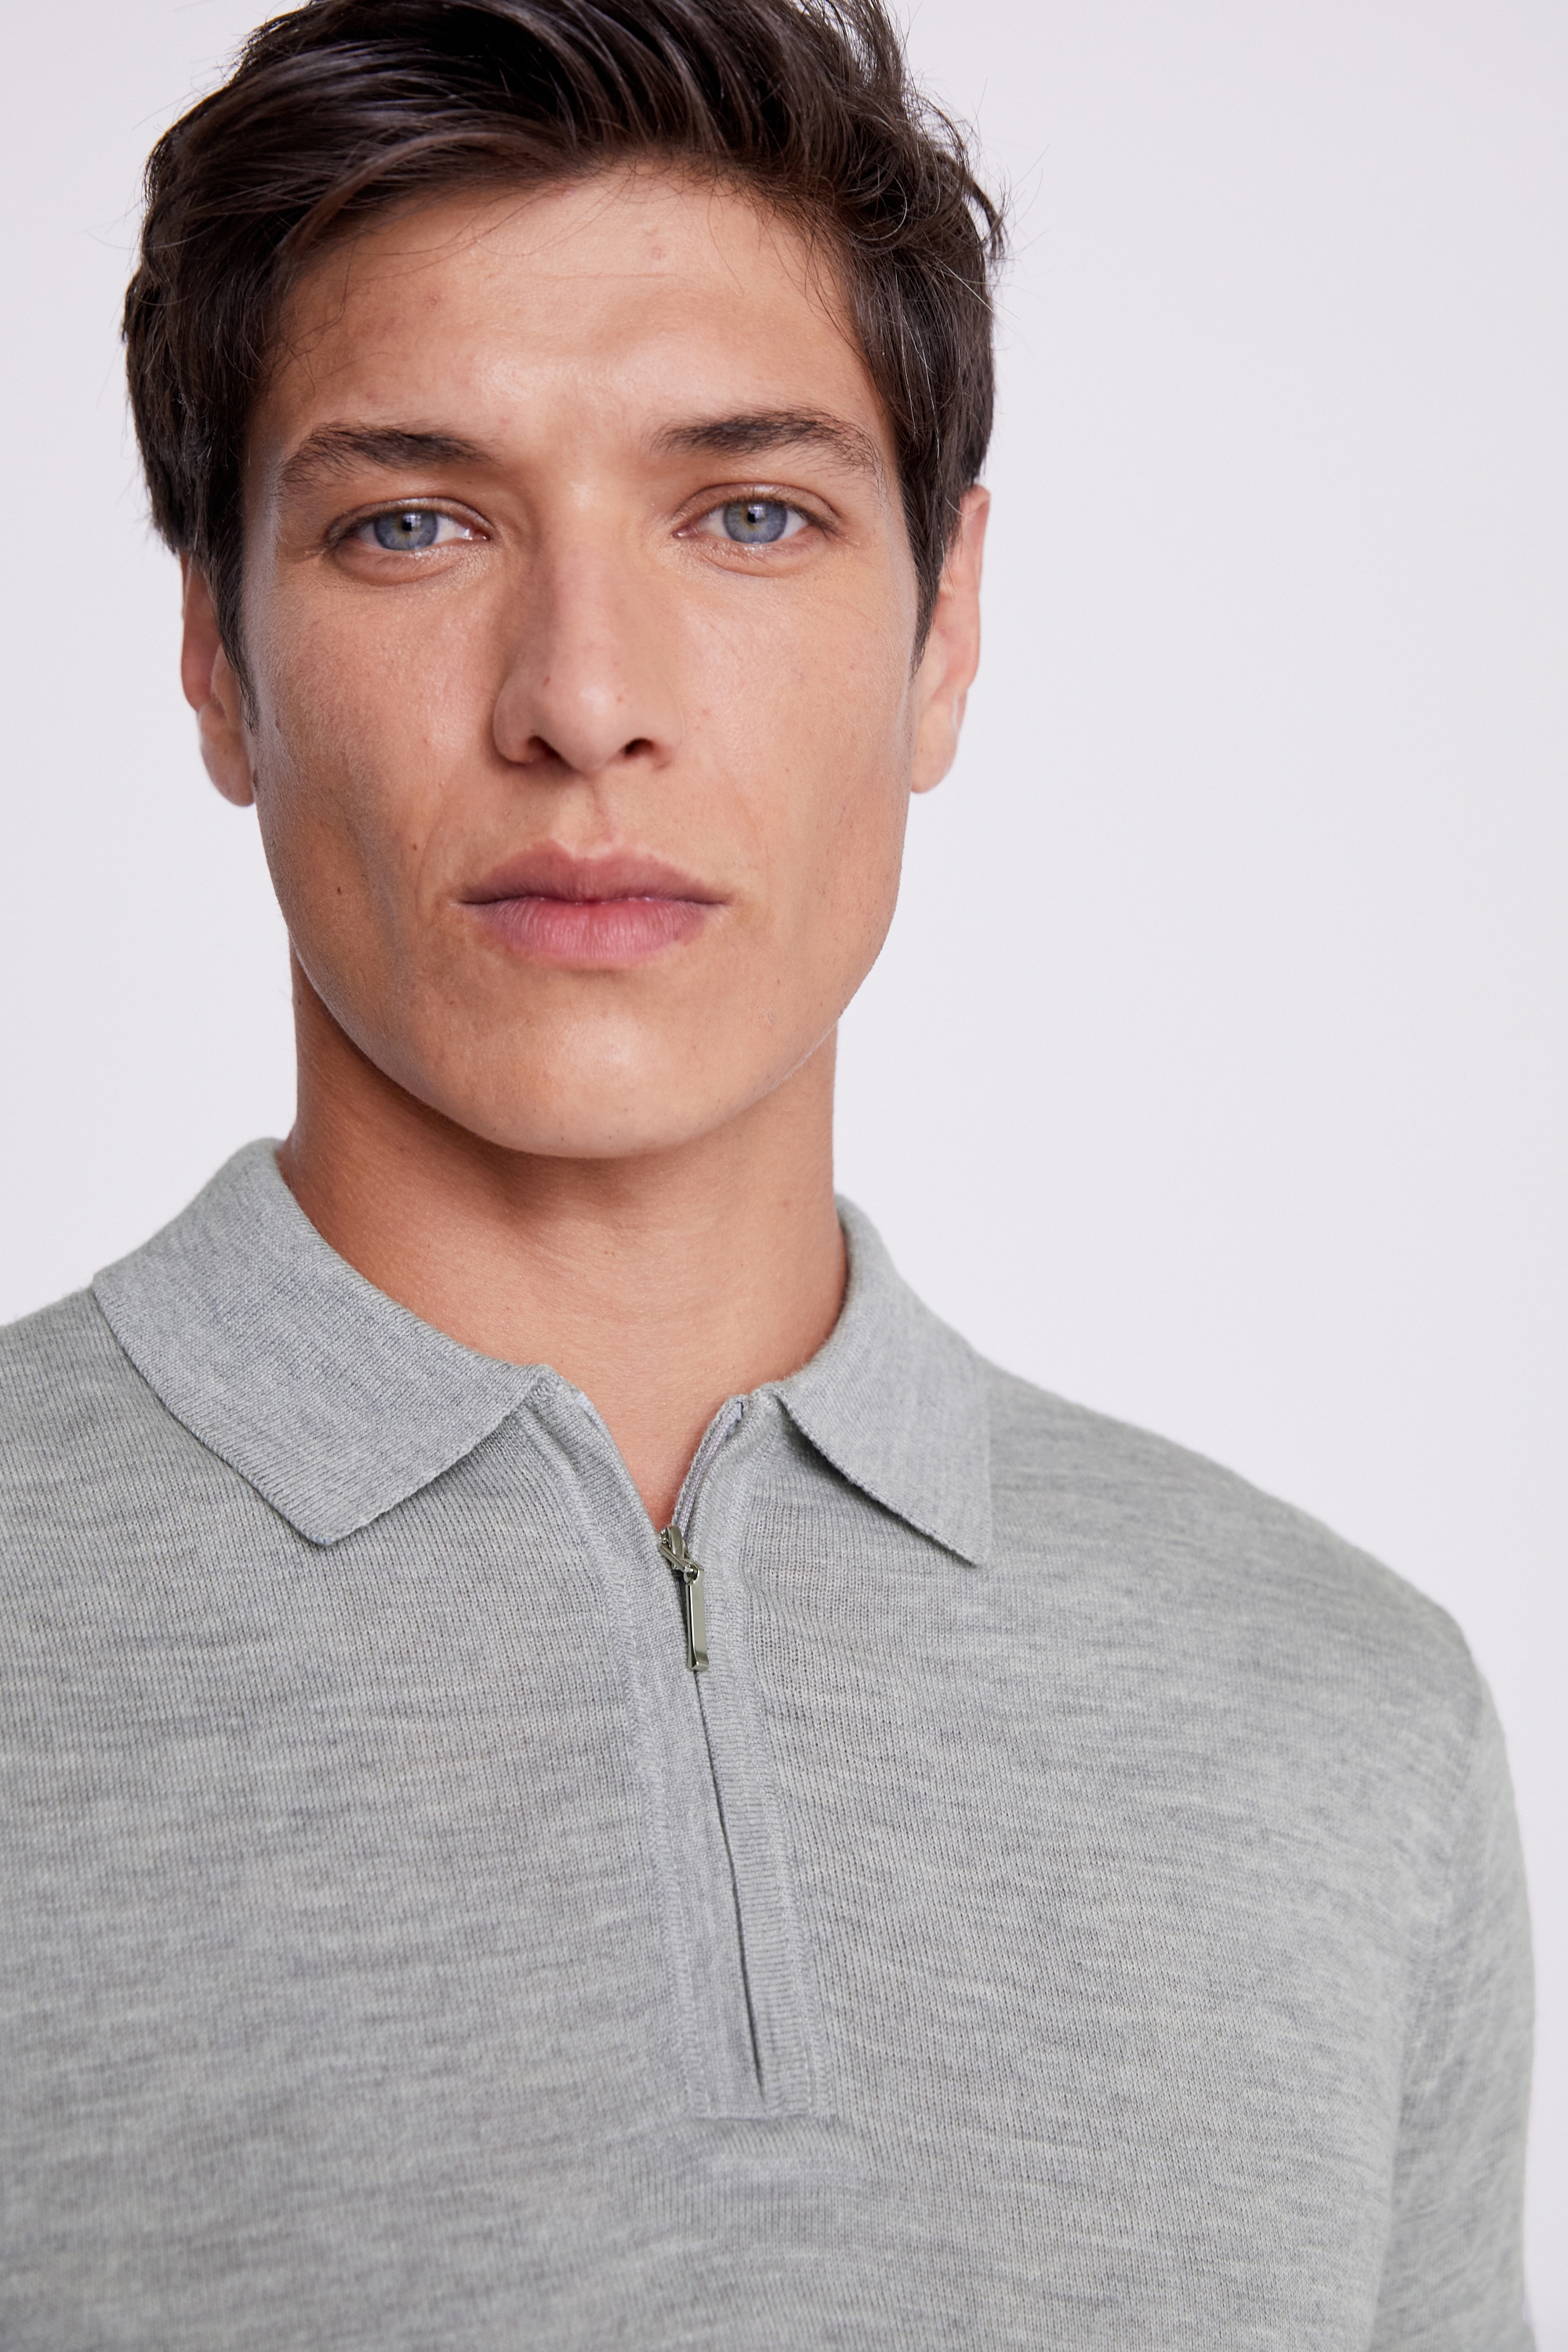 Light Grey Merino Zip-Neck Polo Shirt | Buy Online at Moss